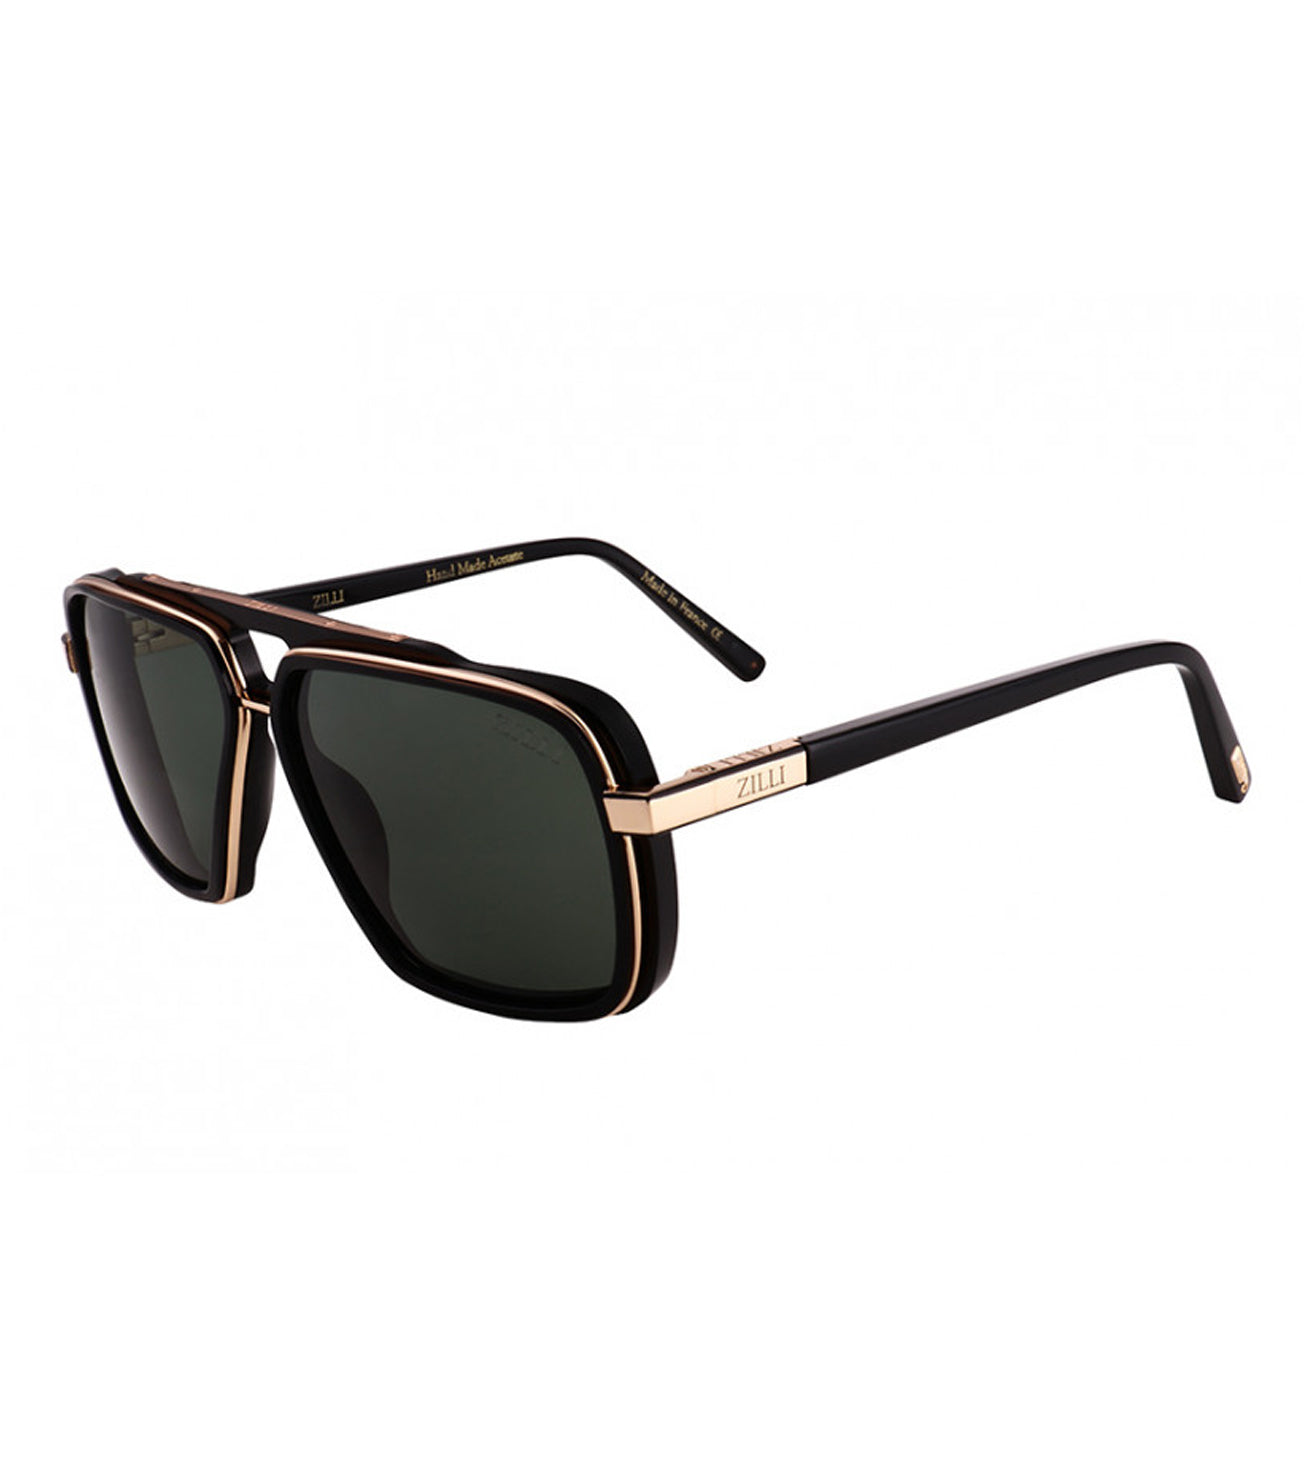 Zilli Men's Grey Aviator Sunglasses